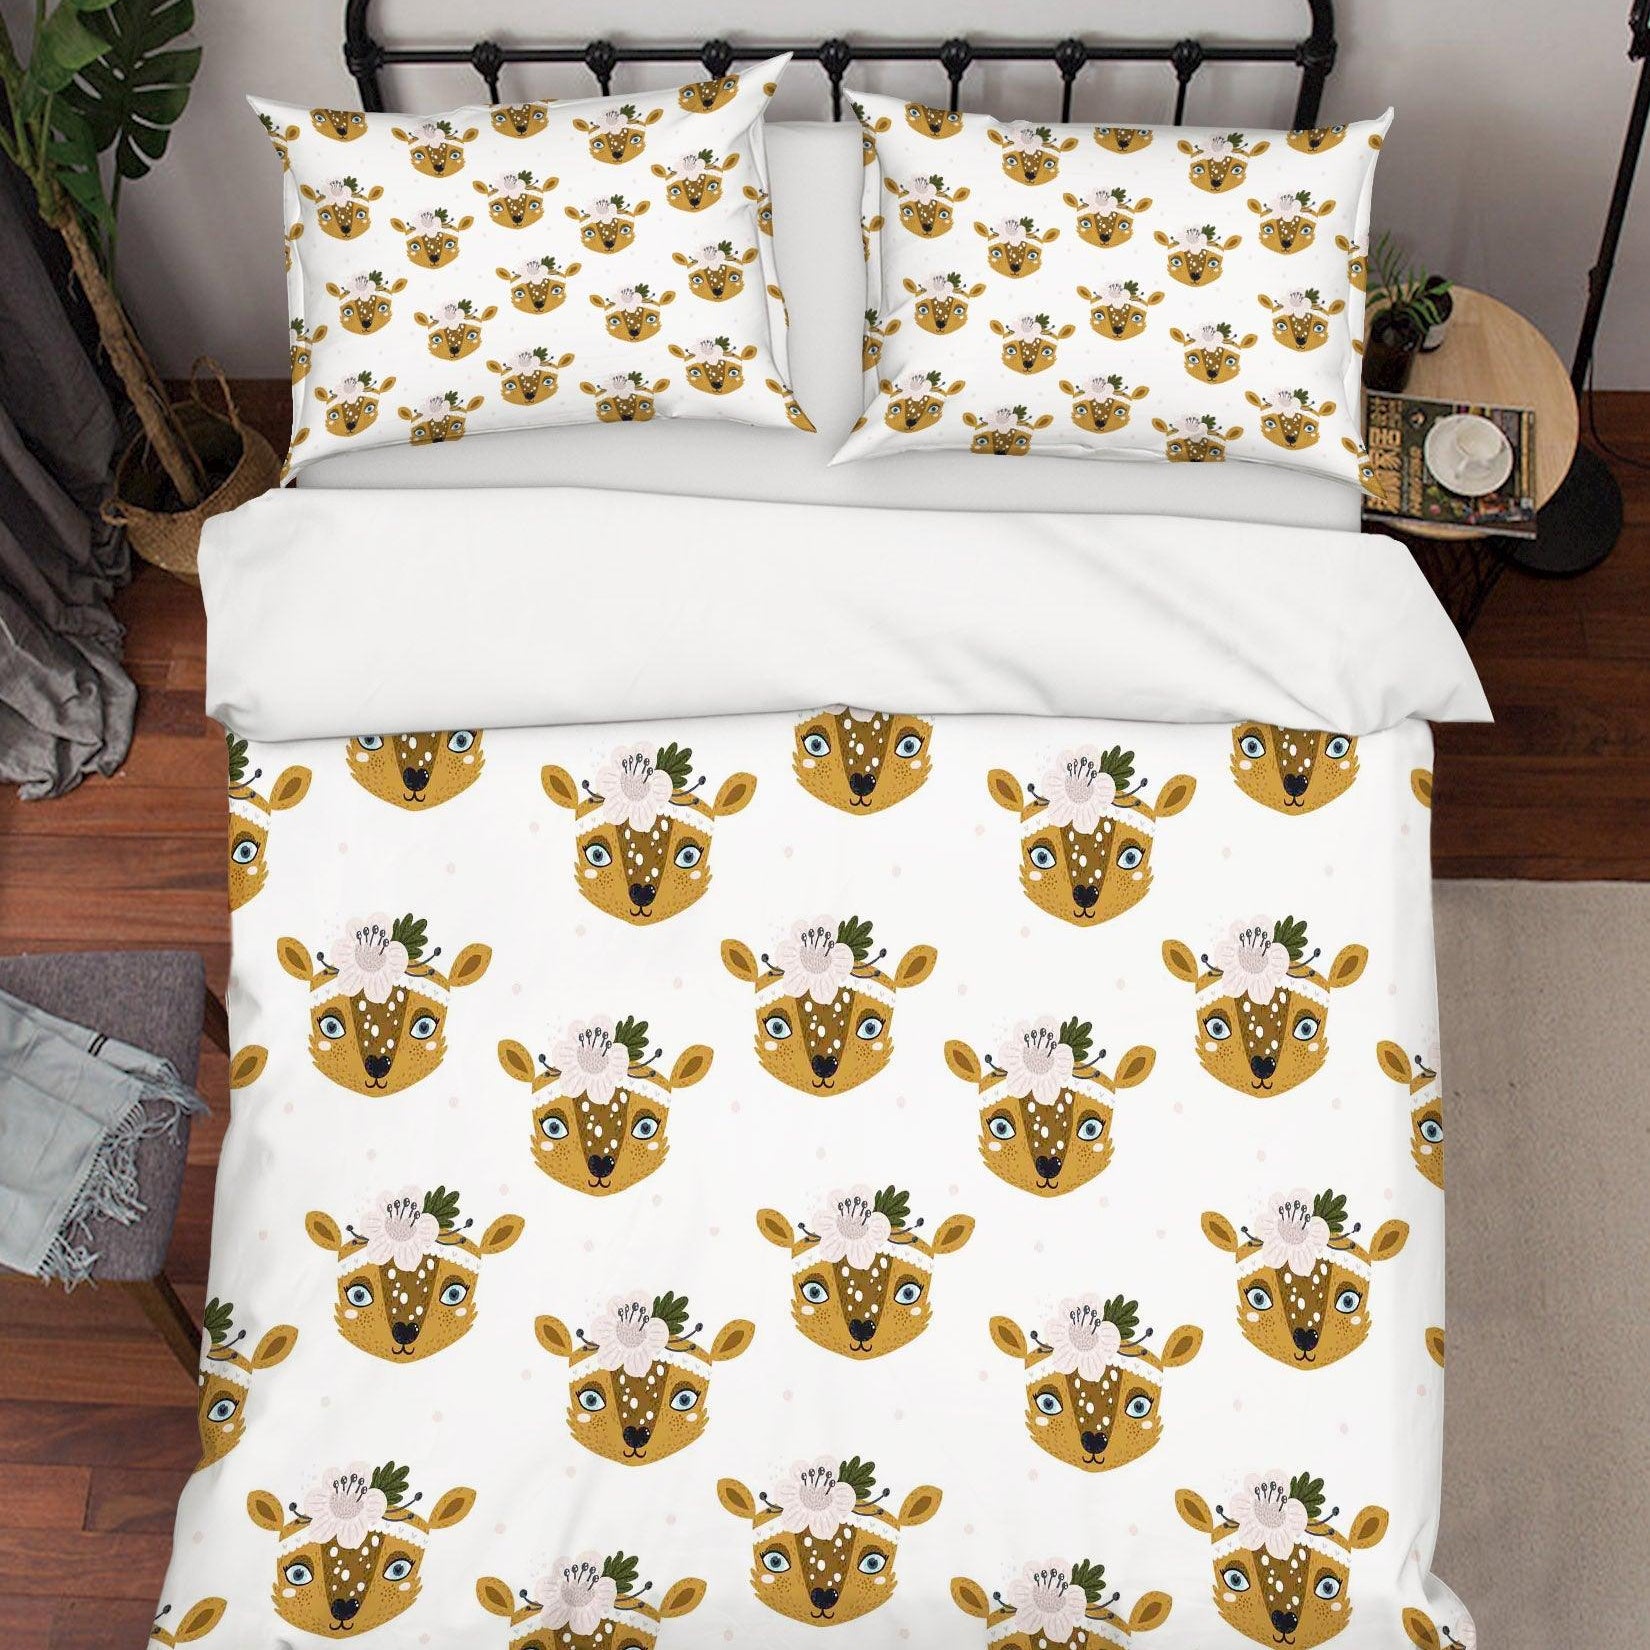 3D White Animal Deer Floral Quilt Cover Set Bedding Set Duvet Cover Pillowcases SF112- Jess Art Decoration